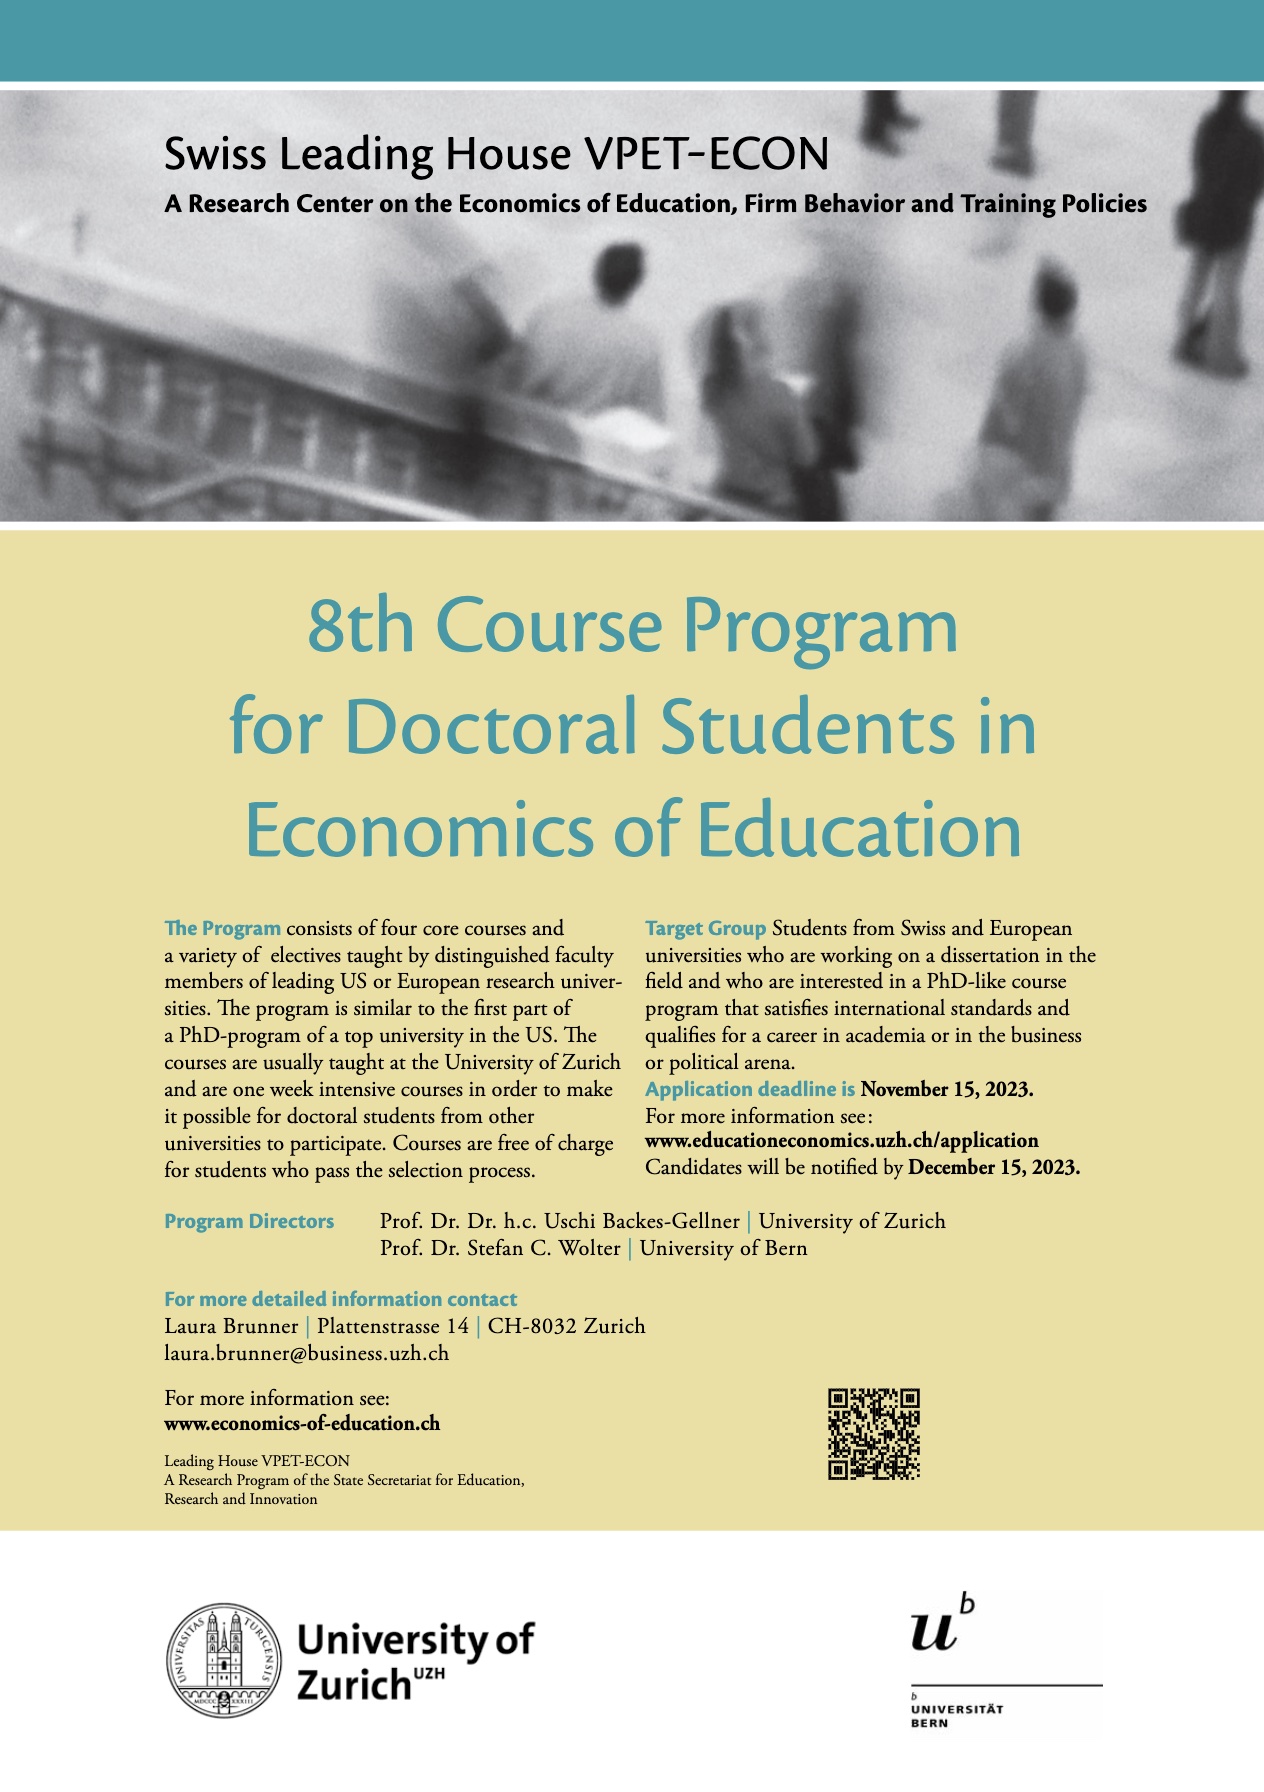 Course Program Poster